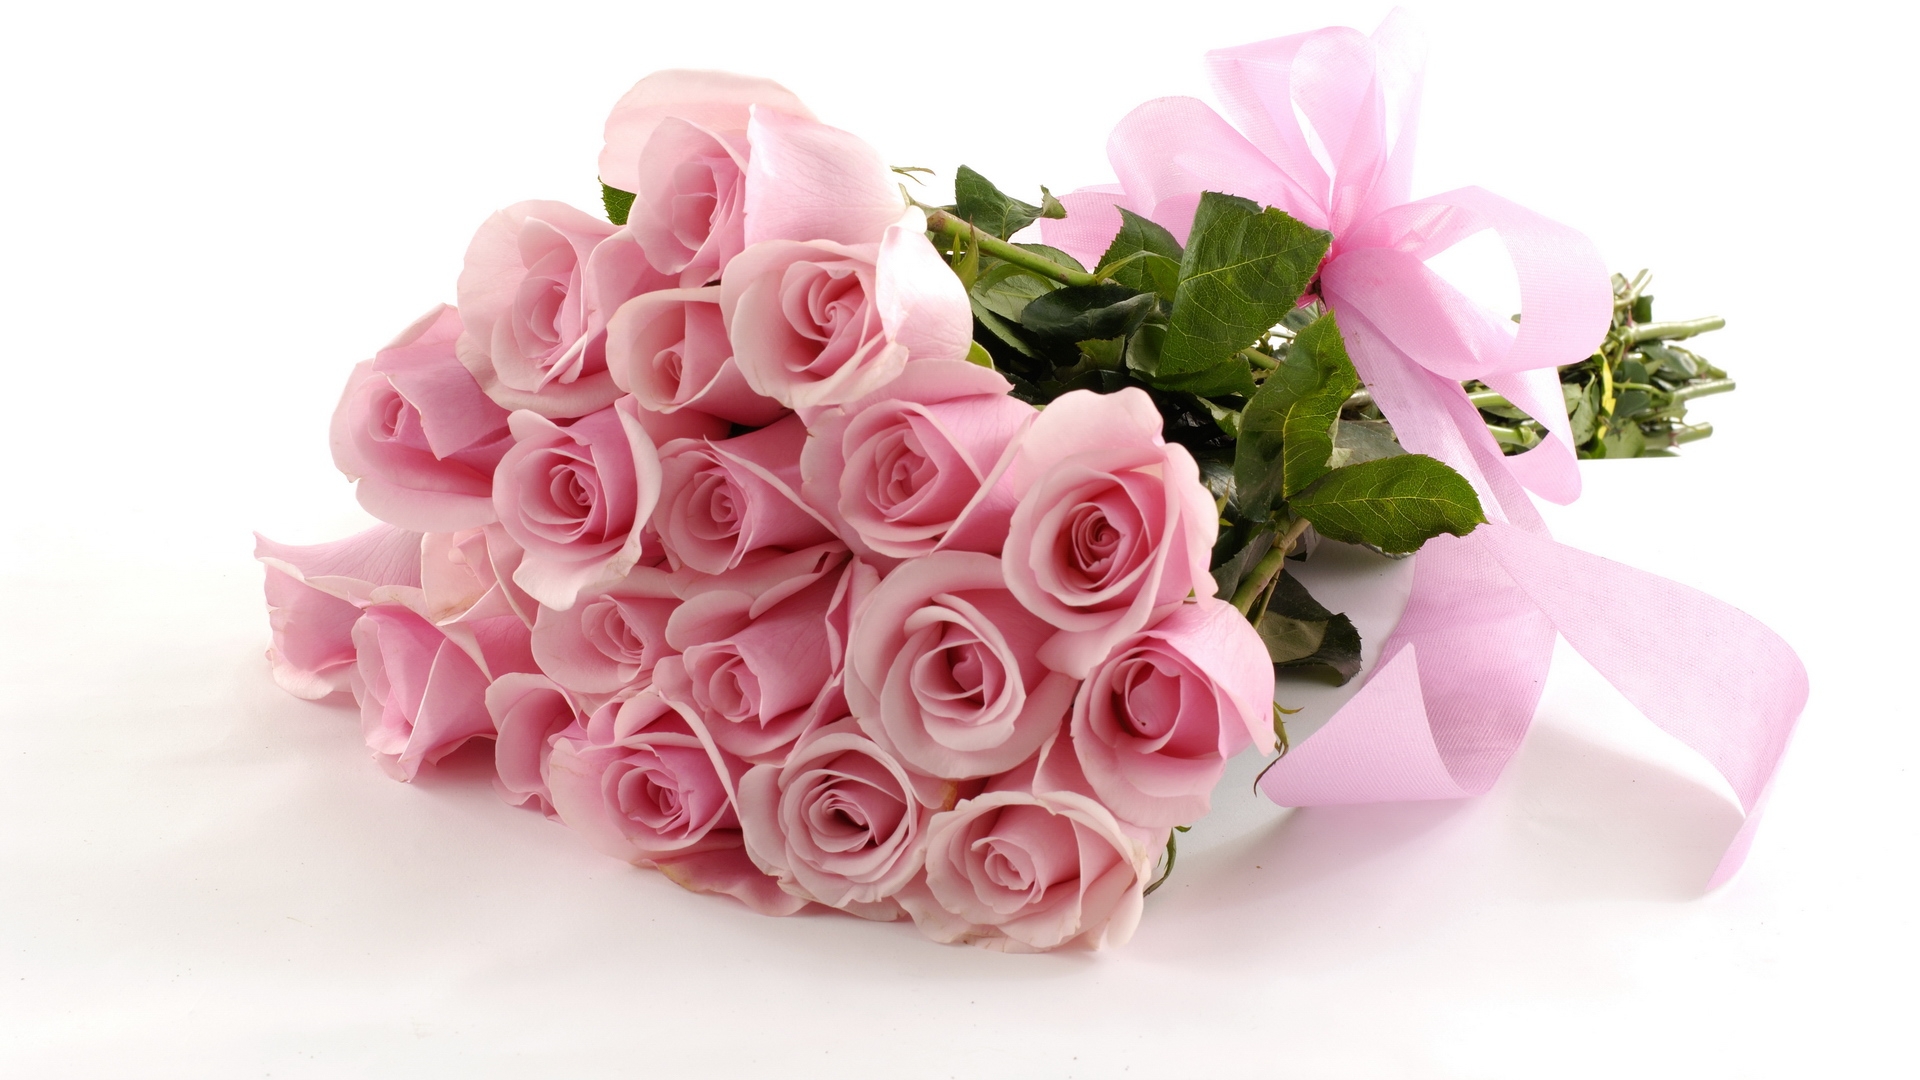 Саяногорск Инфо - holidays___international_womens_day_beautiful_pink_bouquet_as_a_gift_on_march_8_057093_.jpg, Скачано: 1090